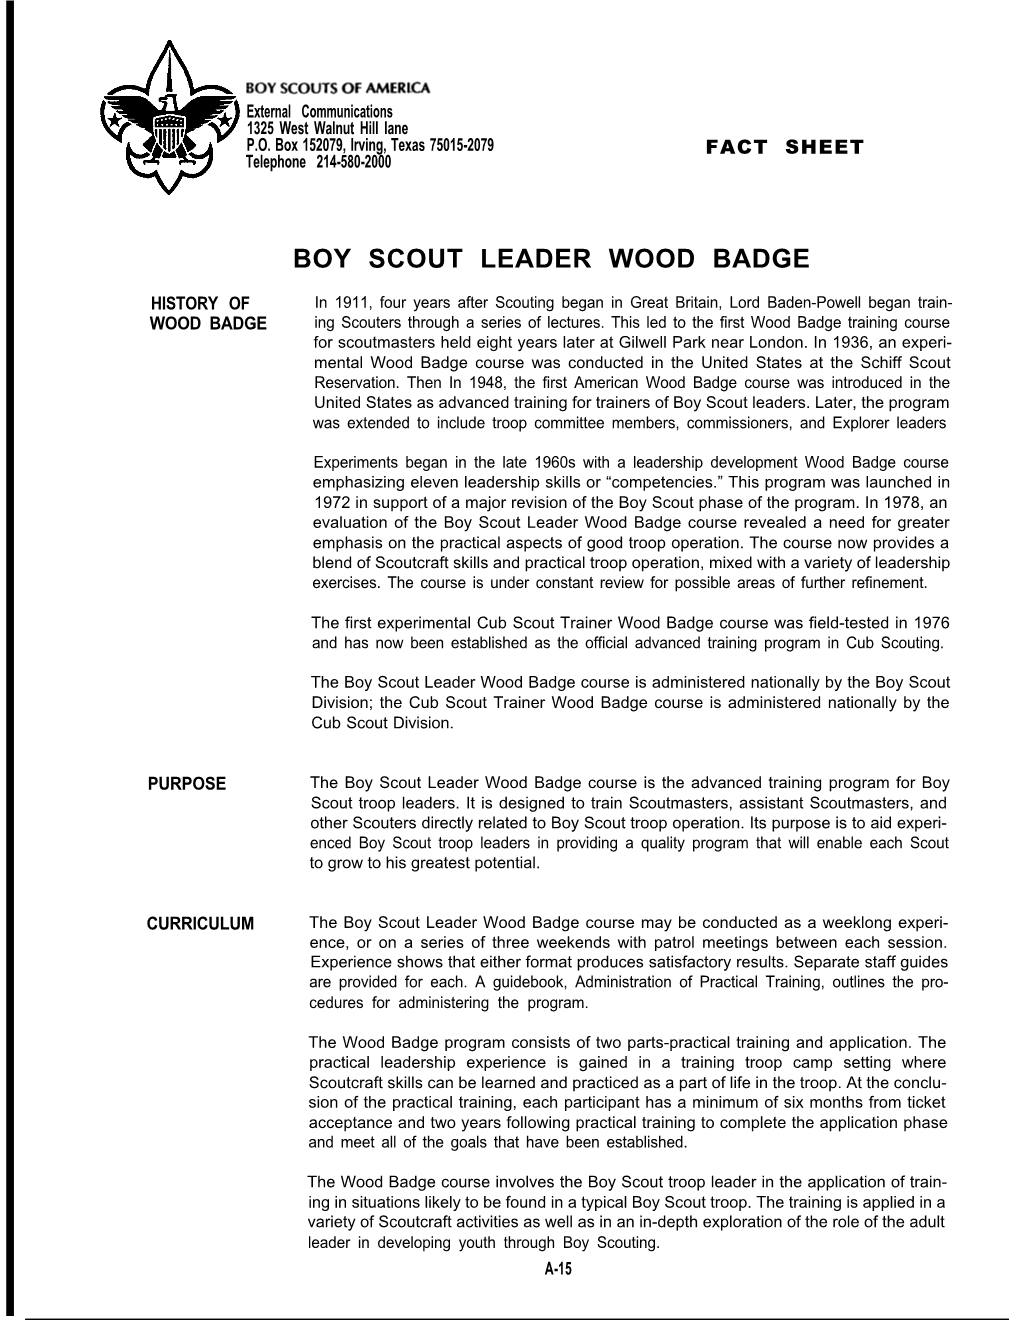 Boy Scout Leader Wood Badge